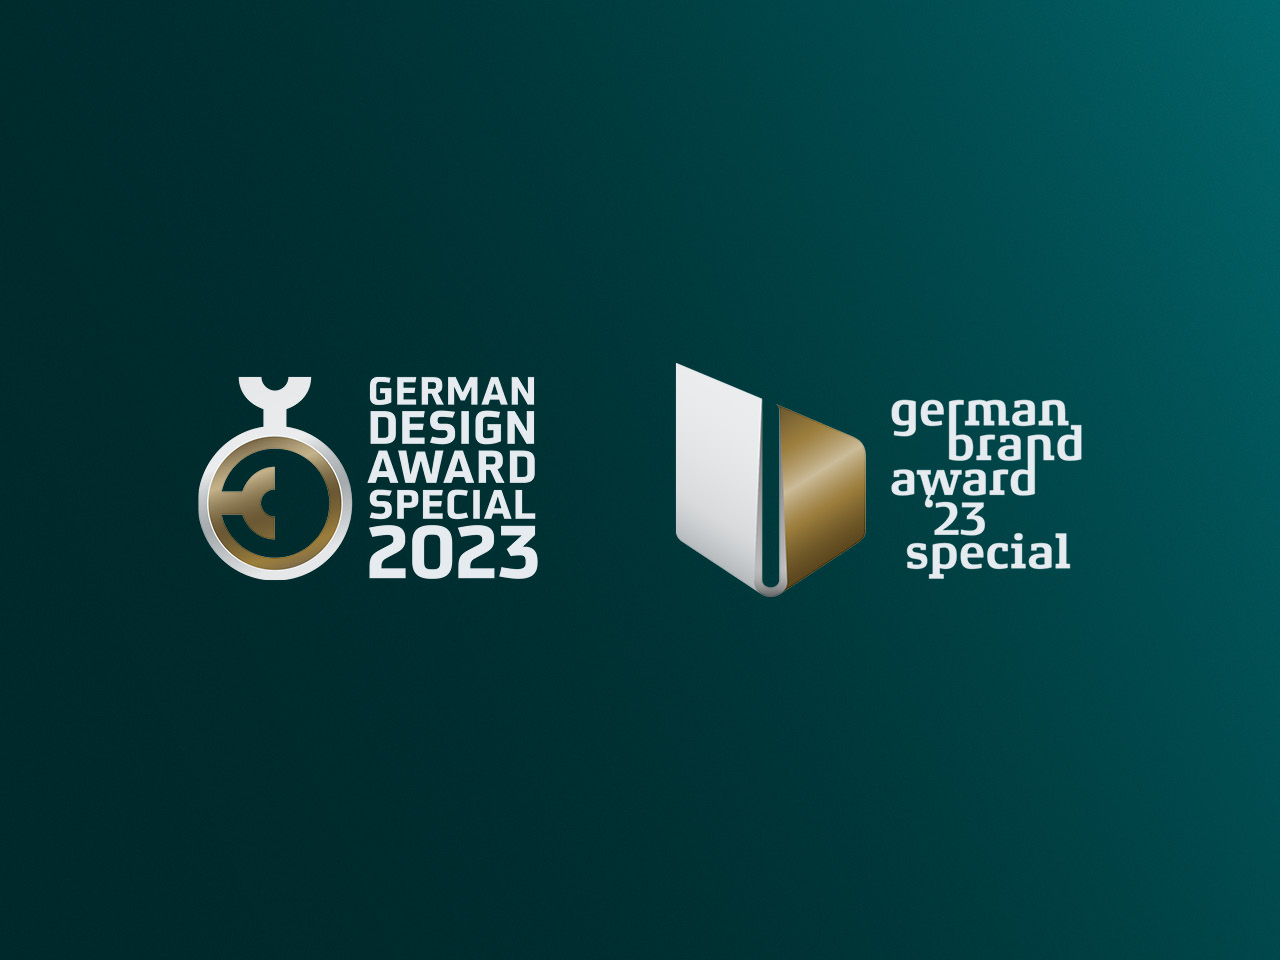 German Design Award – German Brand Award Lables 2023